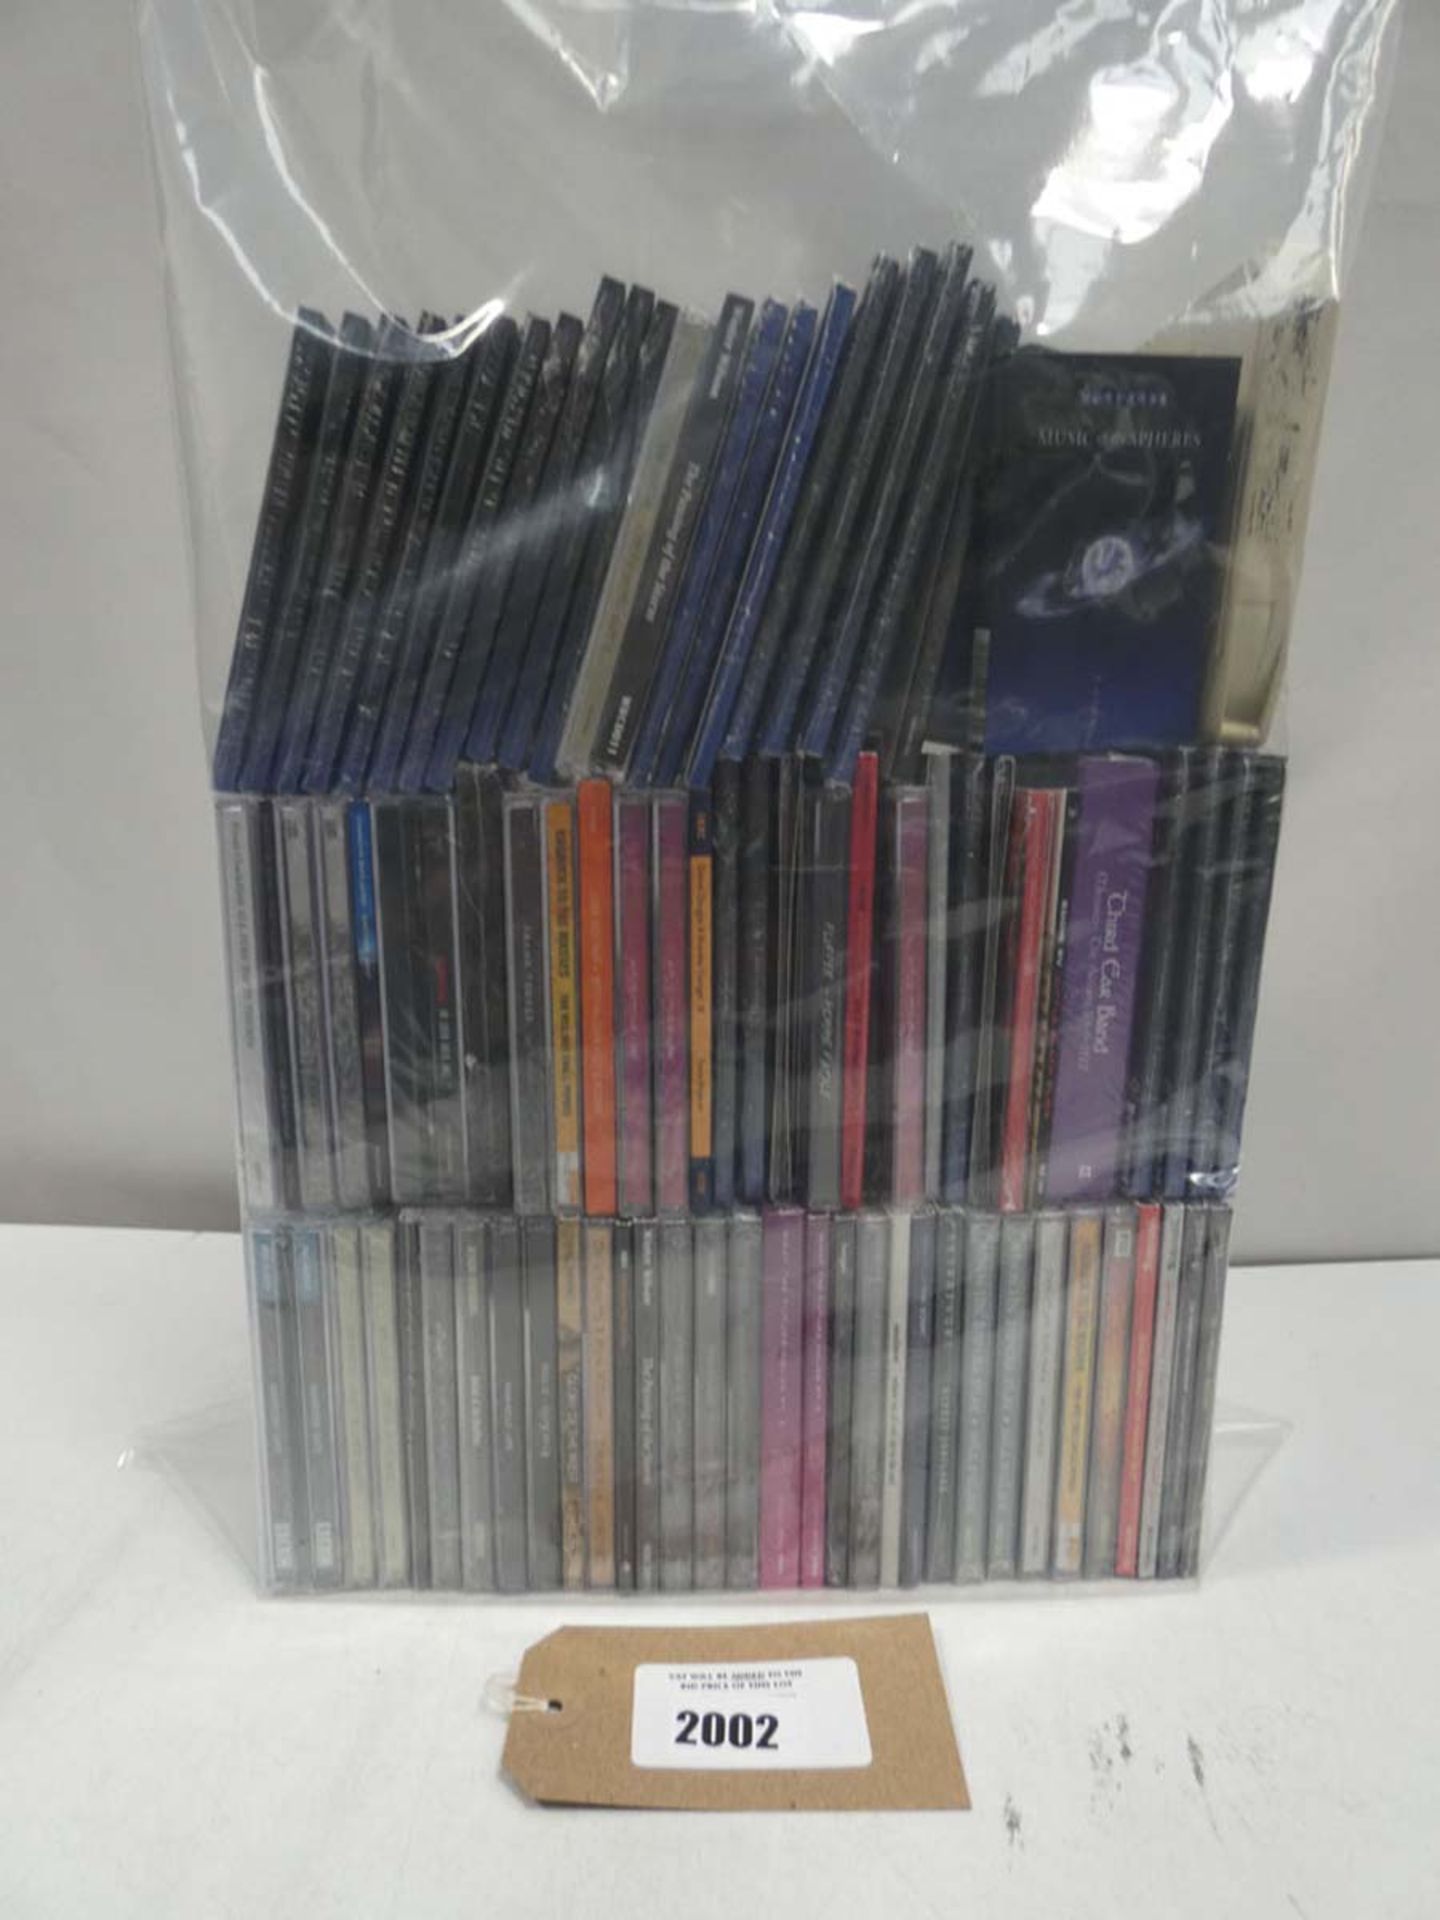 Bag containing various music CD albums